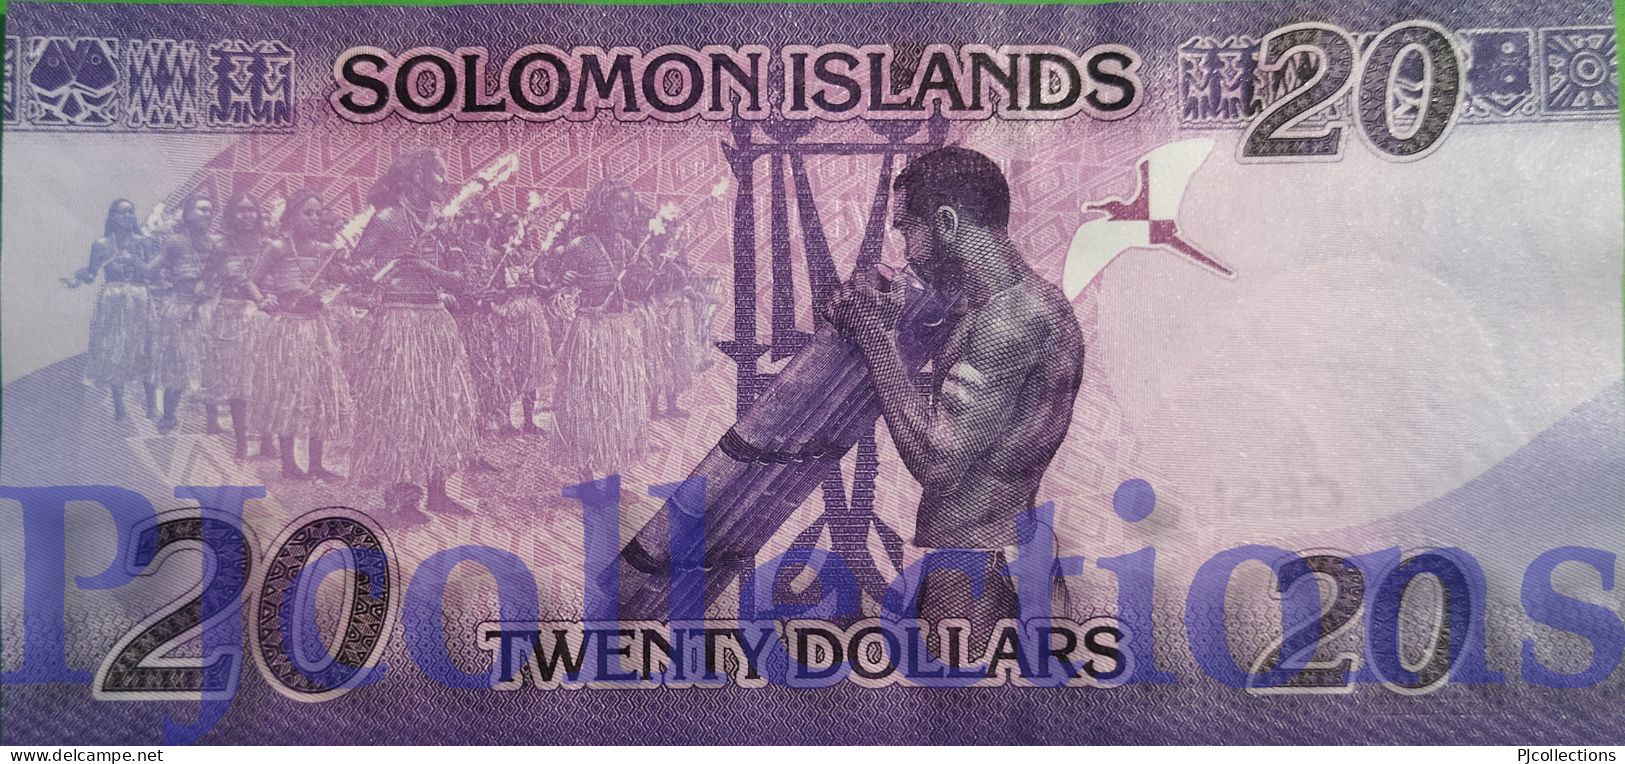 SOLOMON ISLANDS 20 DOLLARS 2017 PICK 34 UNC LOW SERIAL NUMBER "A/1 000766" - Isla Salomon